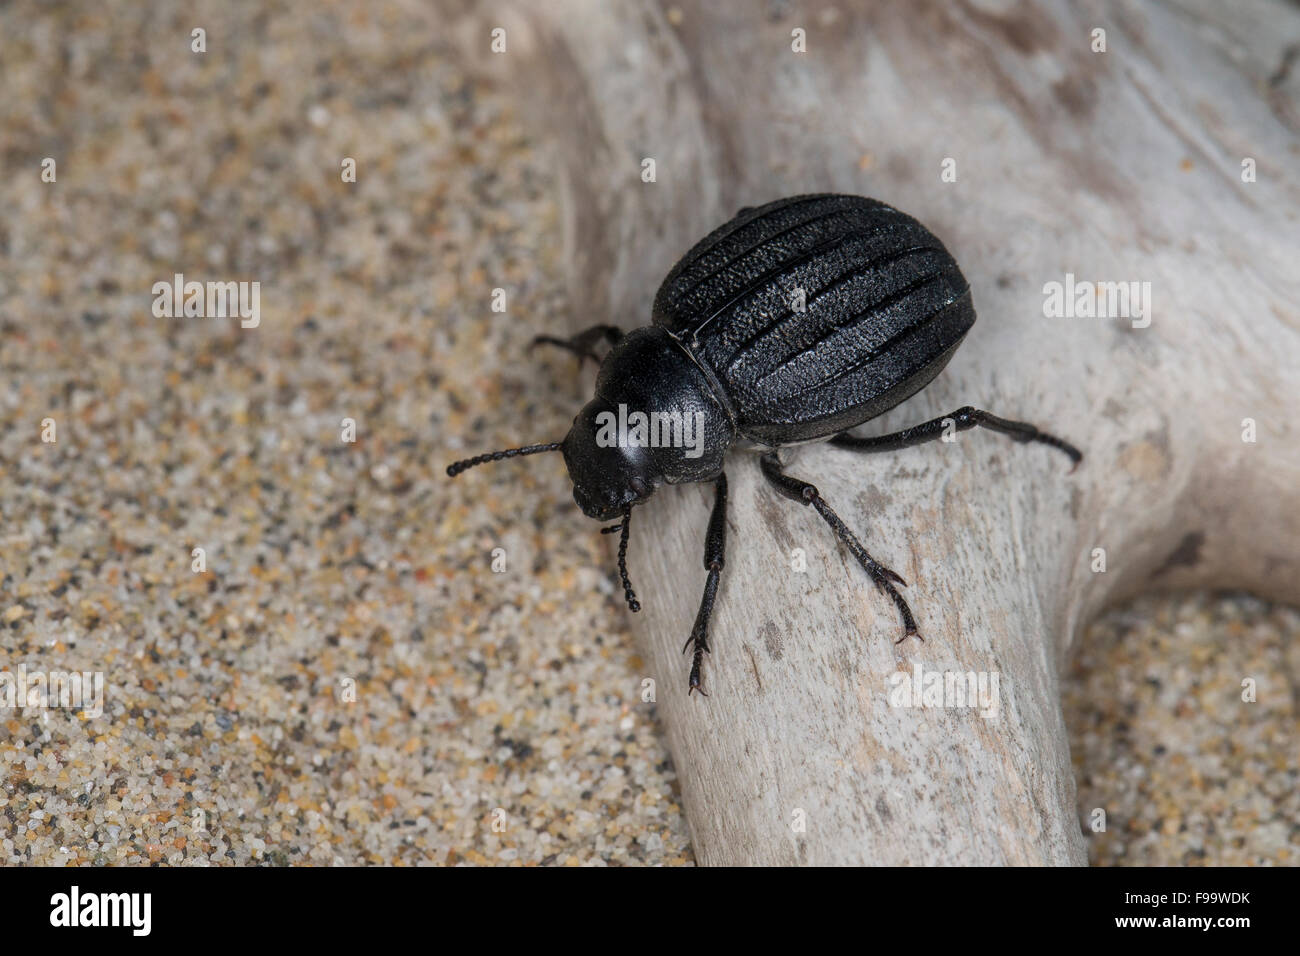 Darkling beetle, Schwarzkäfer, Feistkäfer, Pimelia spec., Pimelia muricata, darkling beetles Stock Photo